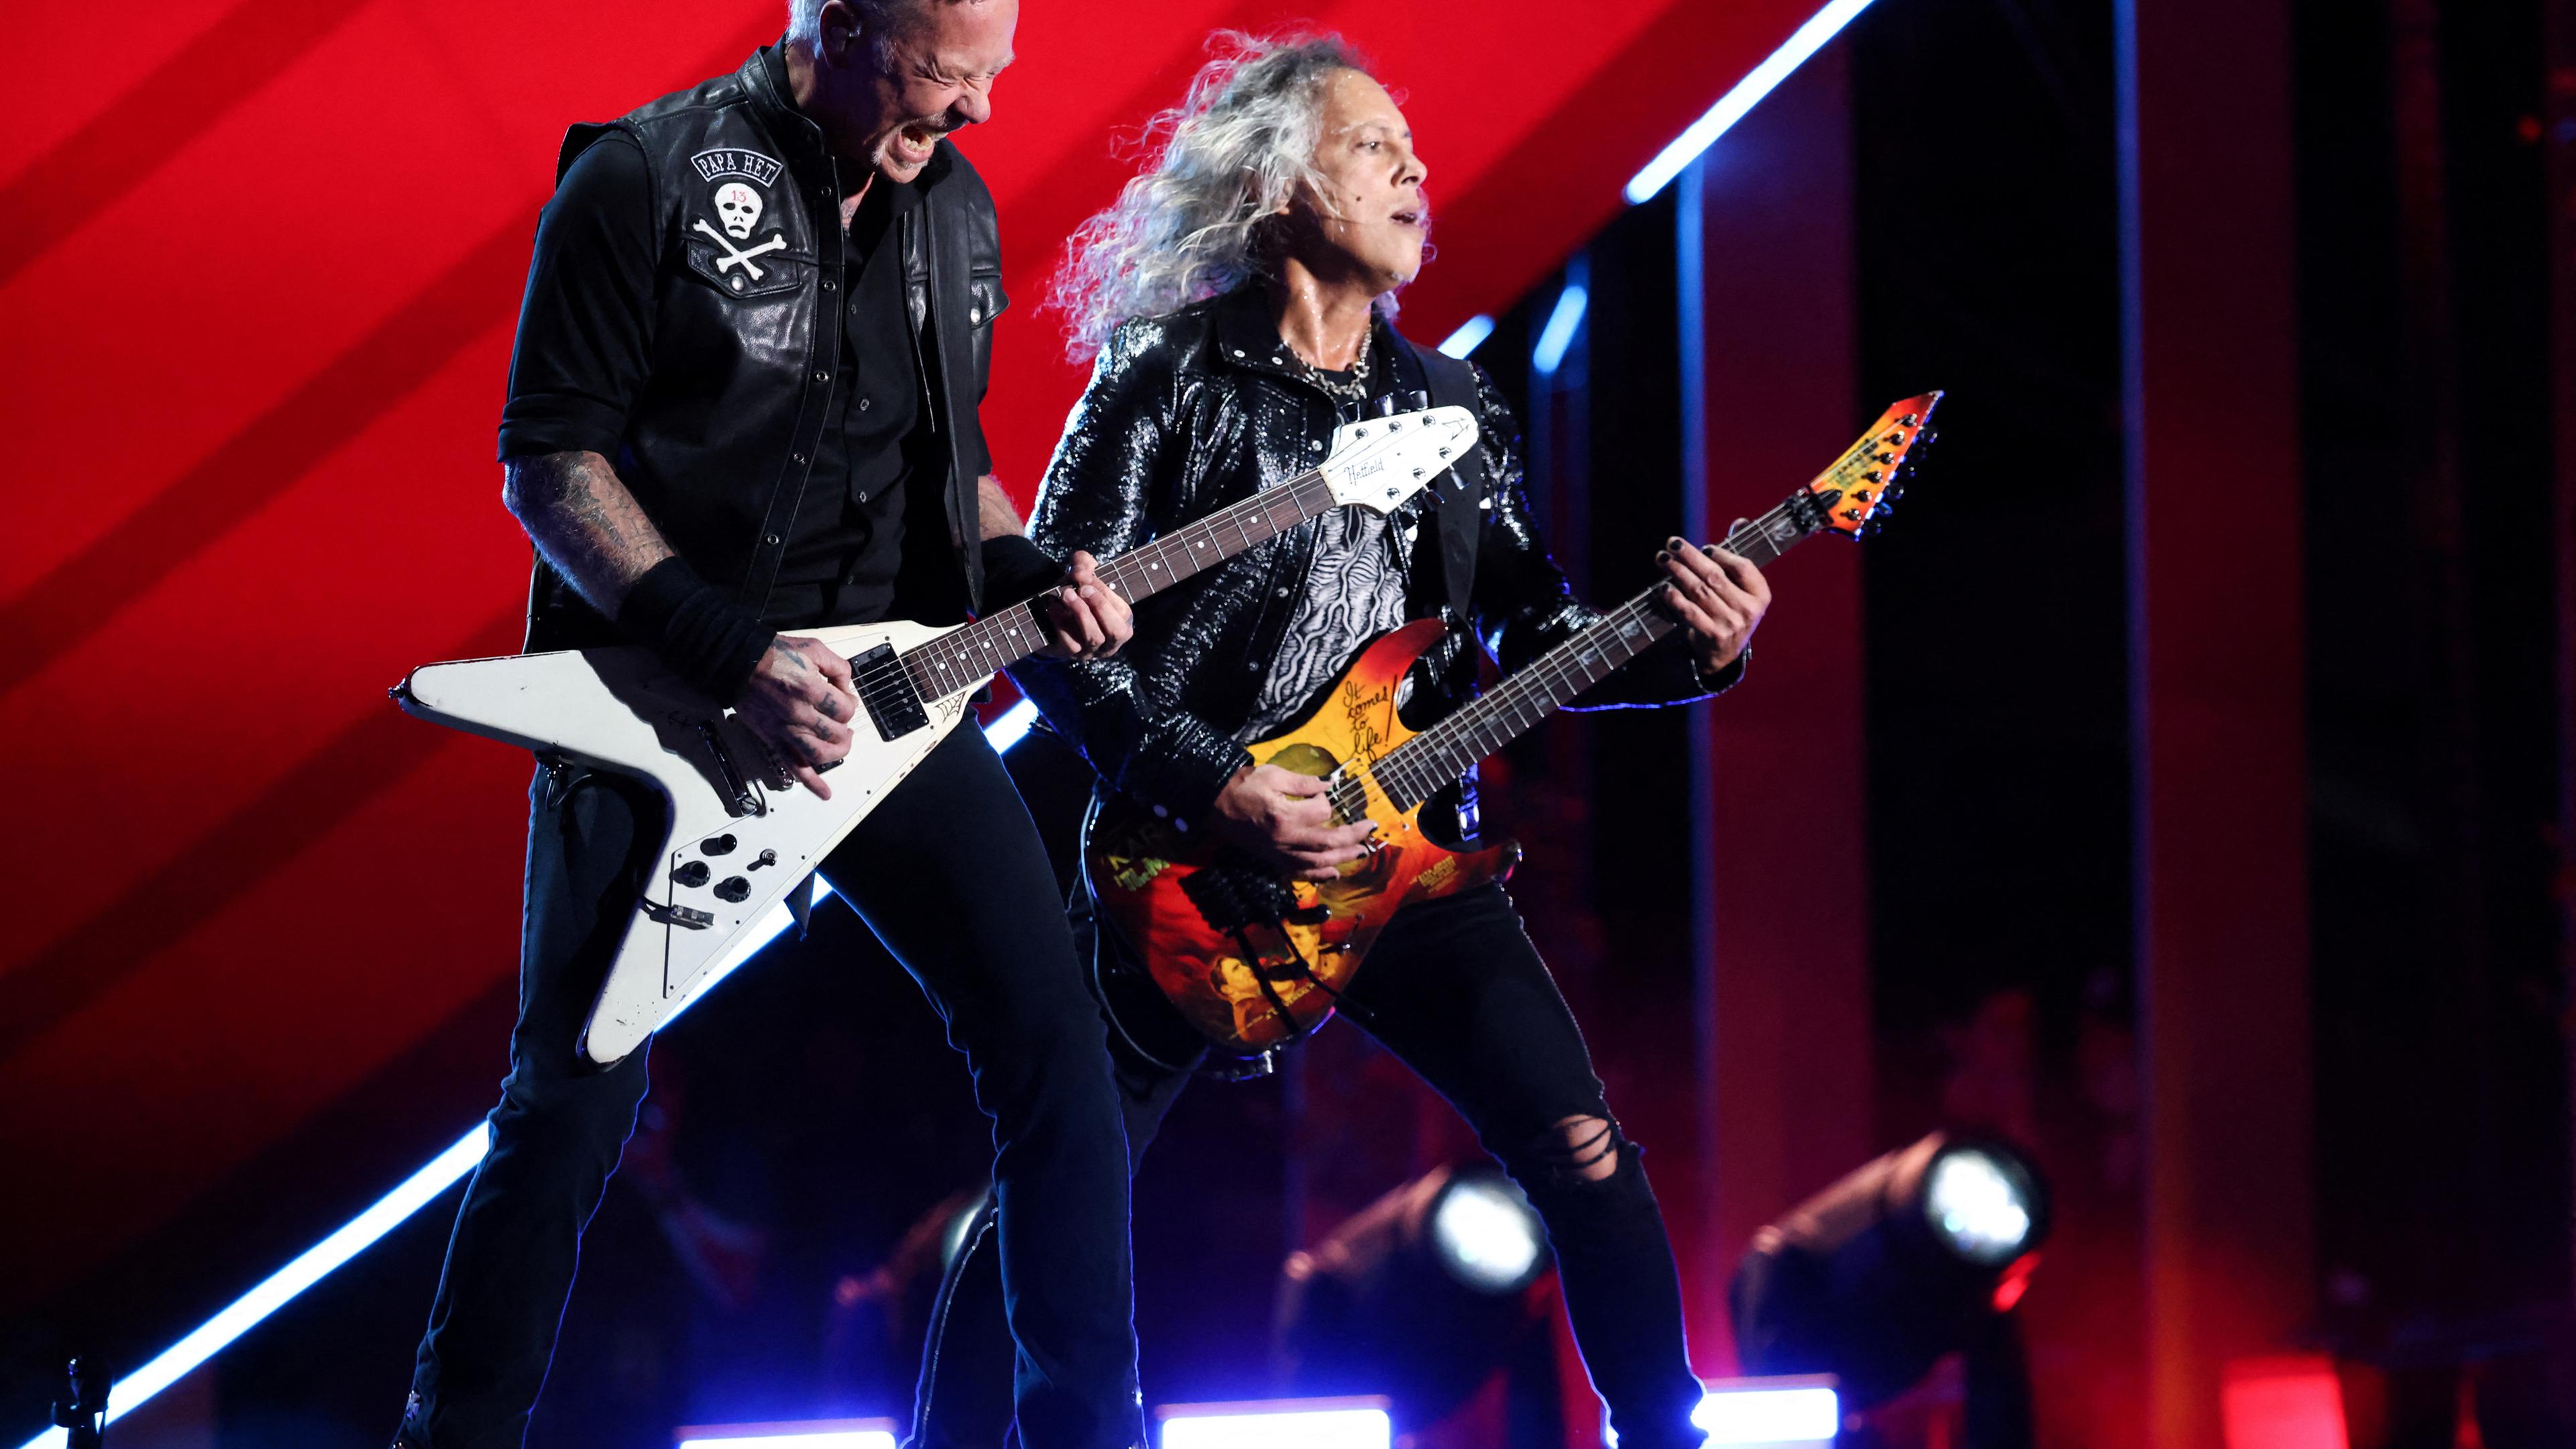 Metallica Metallica performs at the Global Citizen Concert in New York City